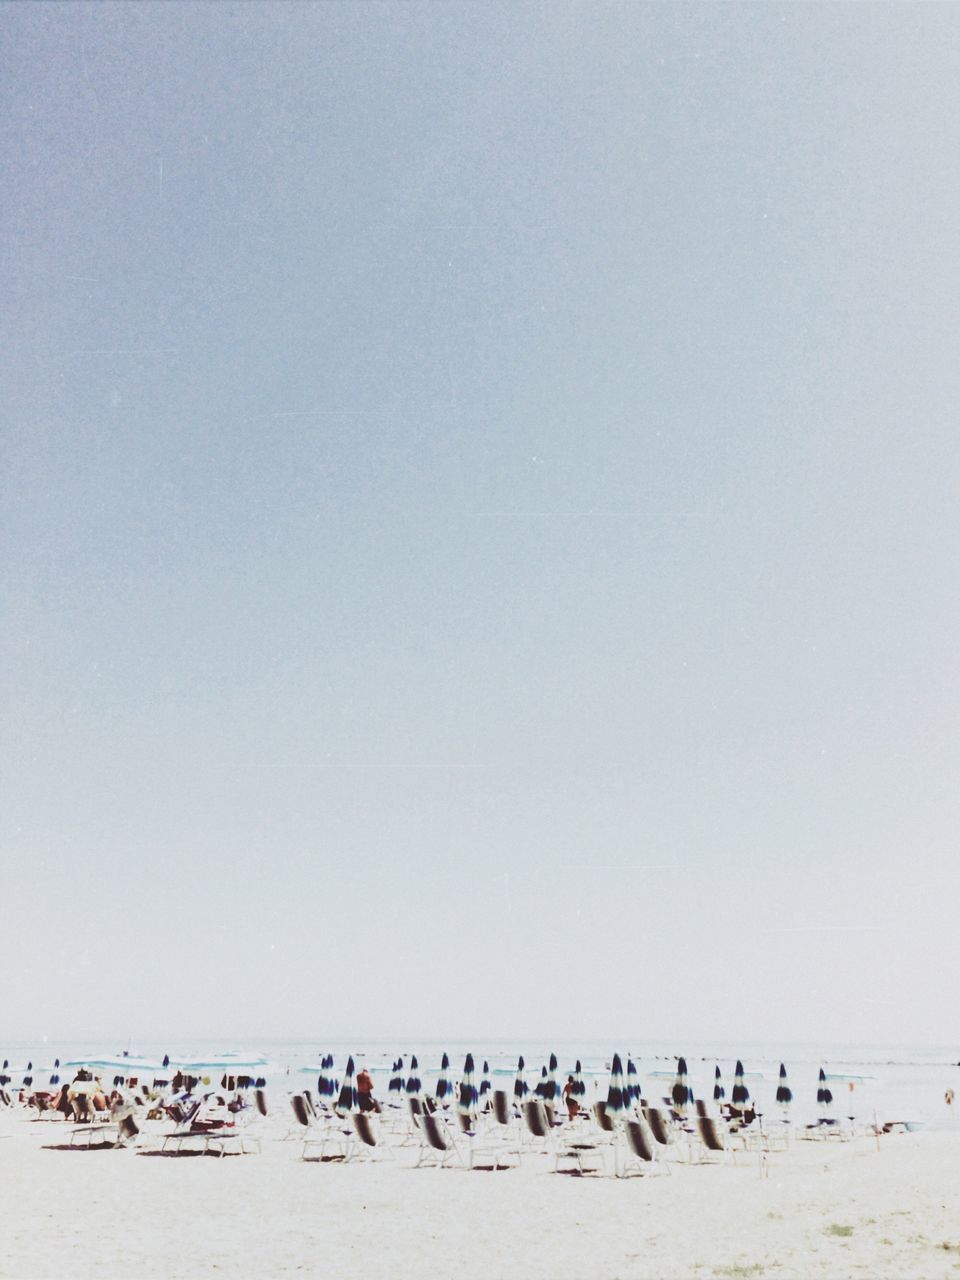 GROUP OF PEOPLE ON SANDY BEACH